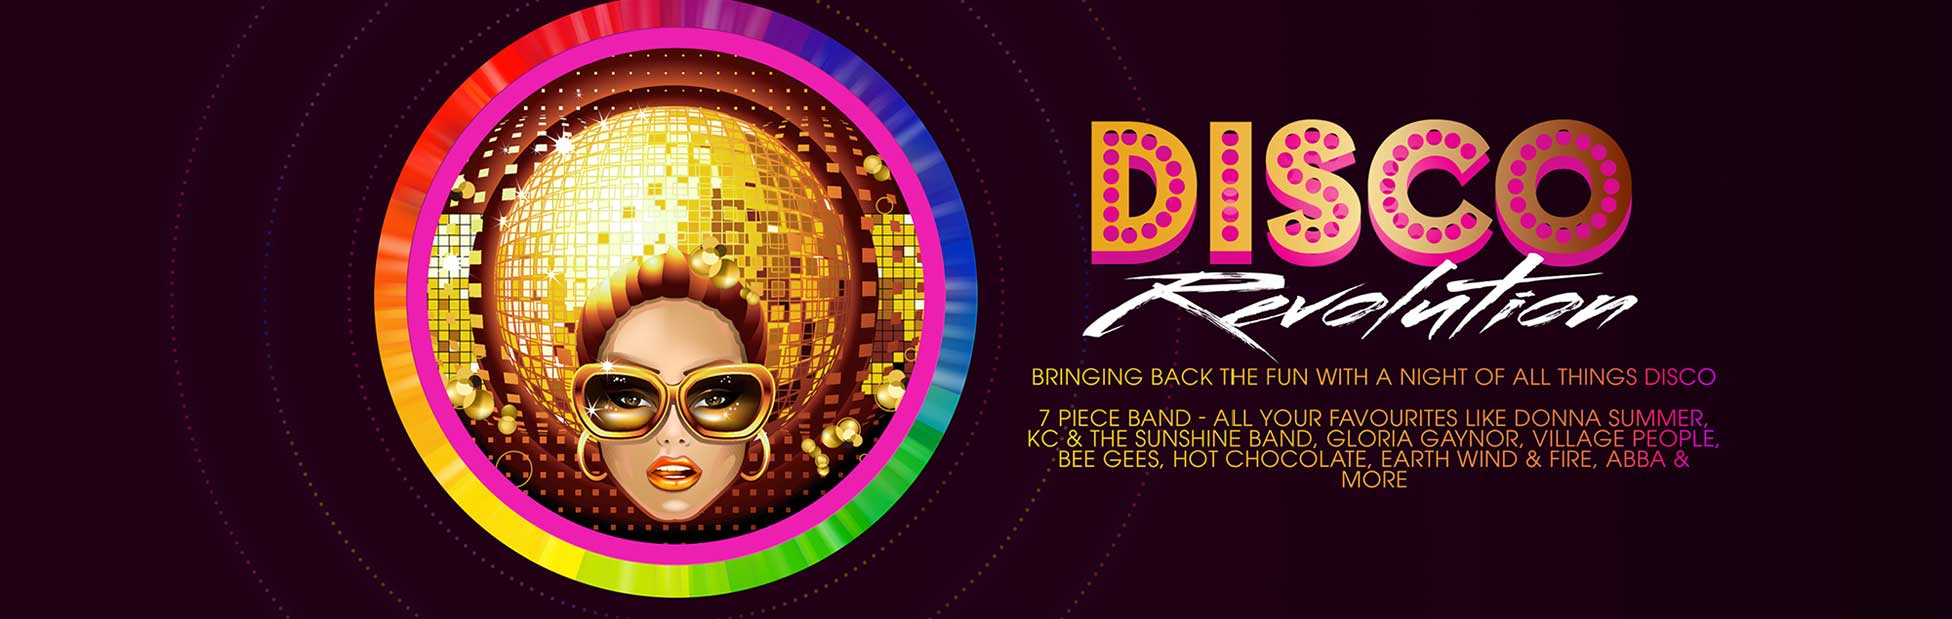 Disco revolution promo